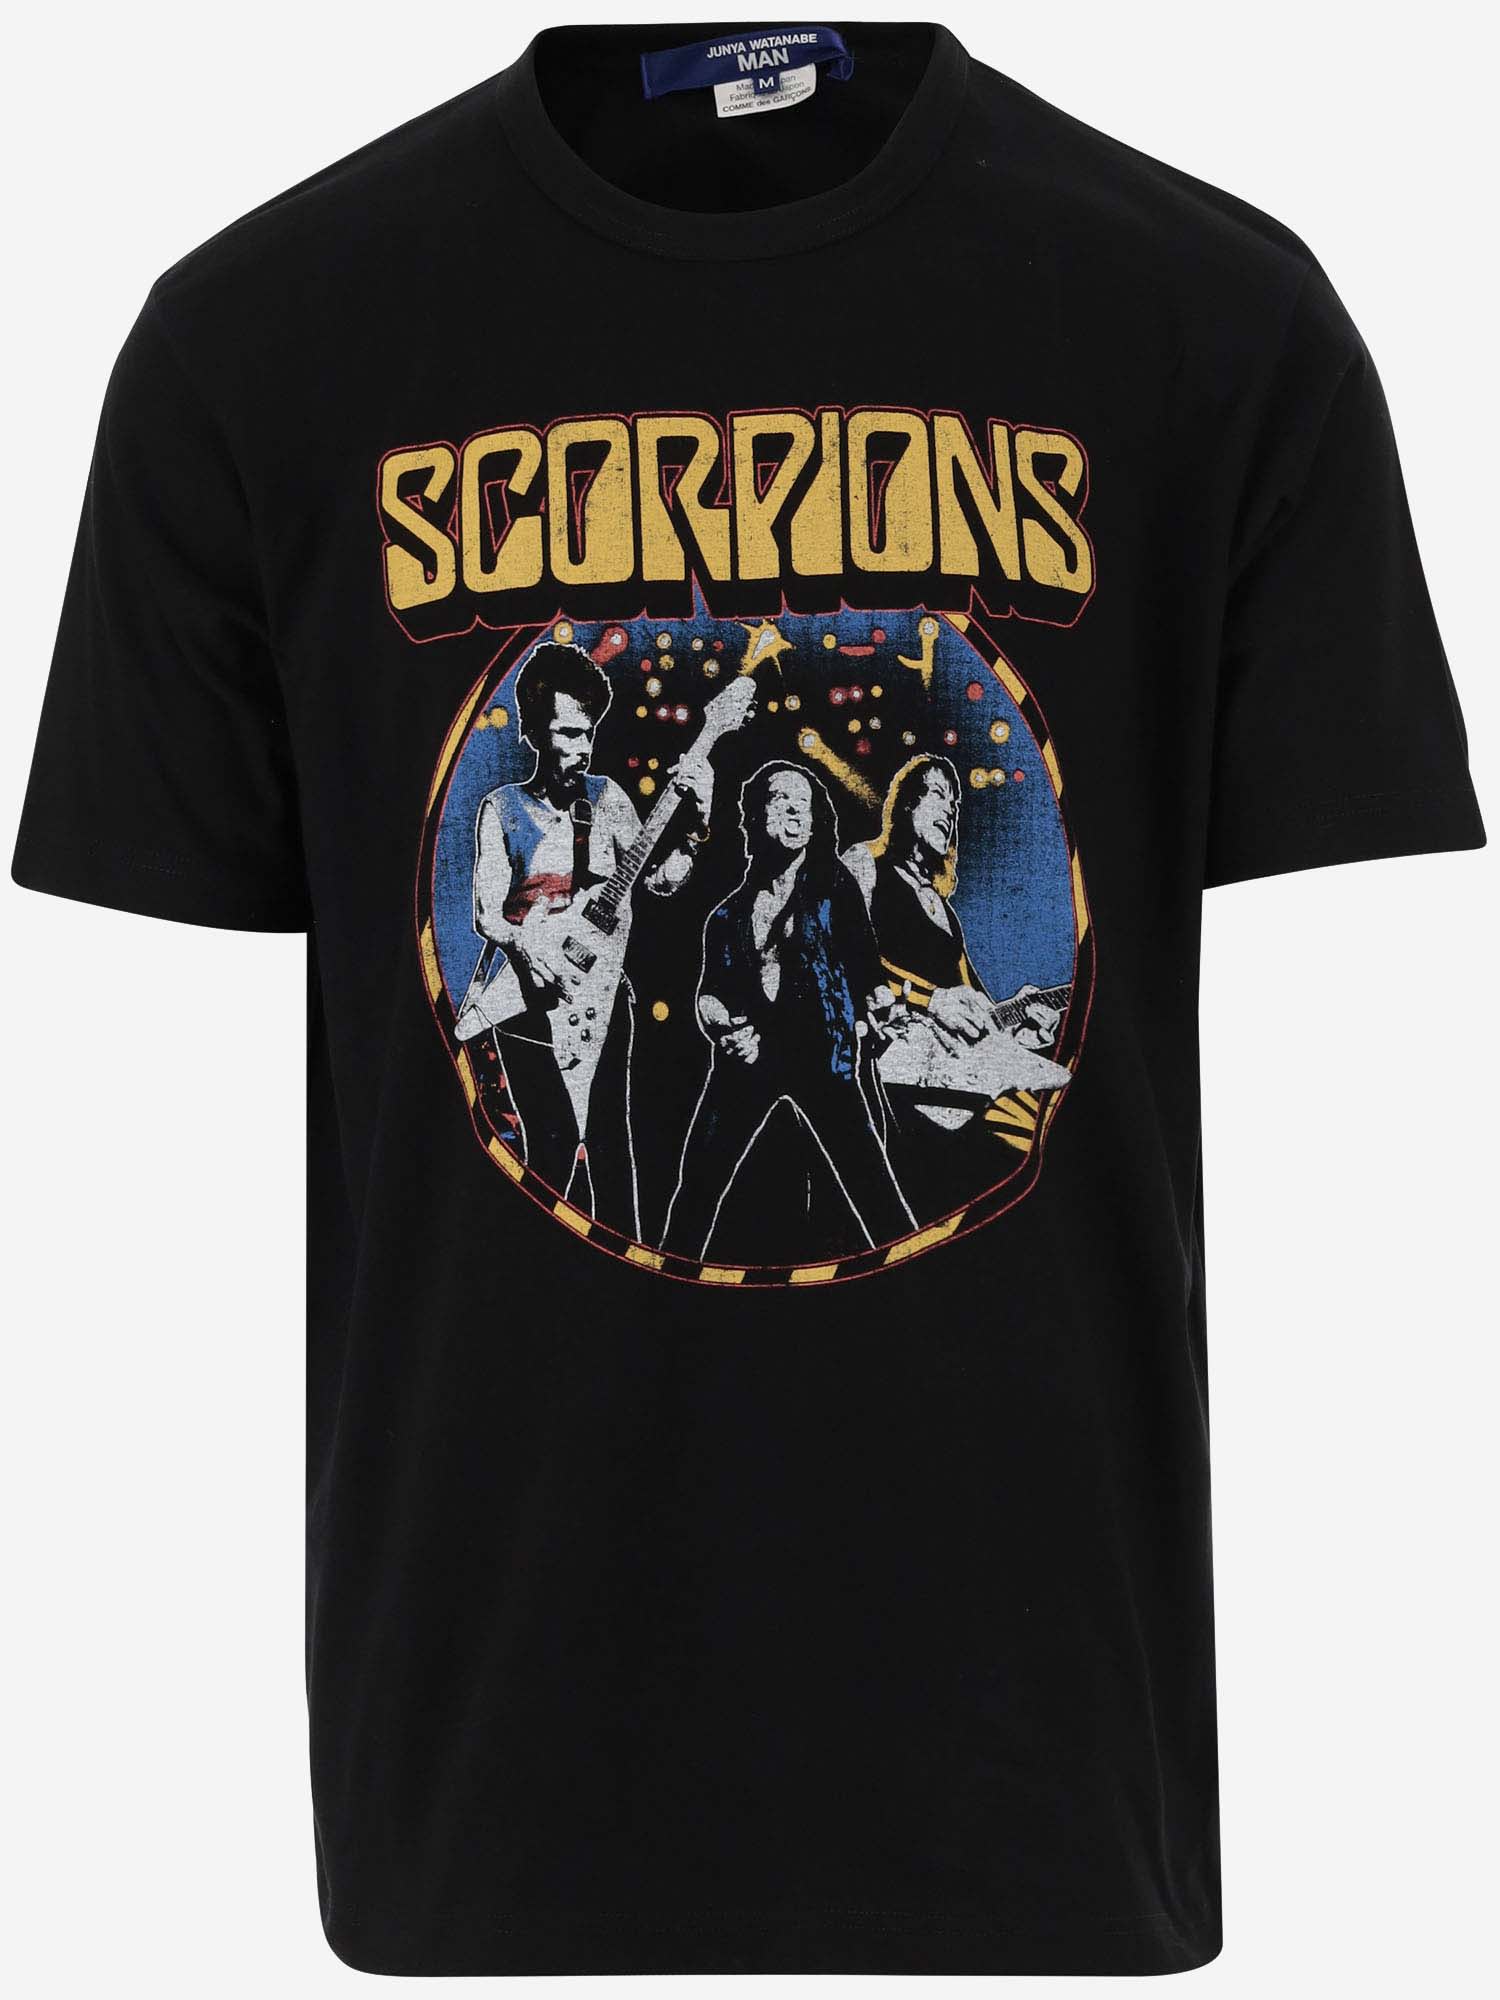 Scorpions Print Cotton T-shirt